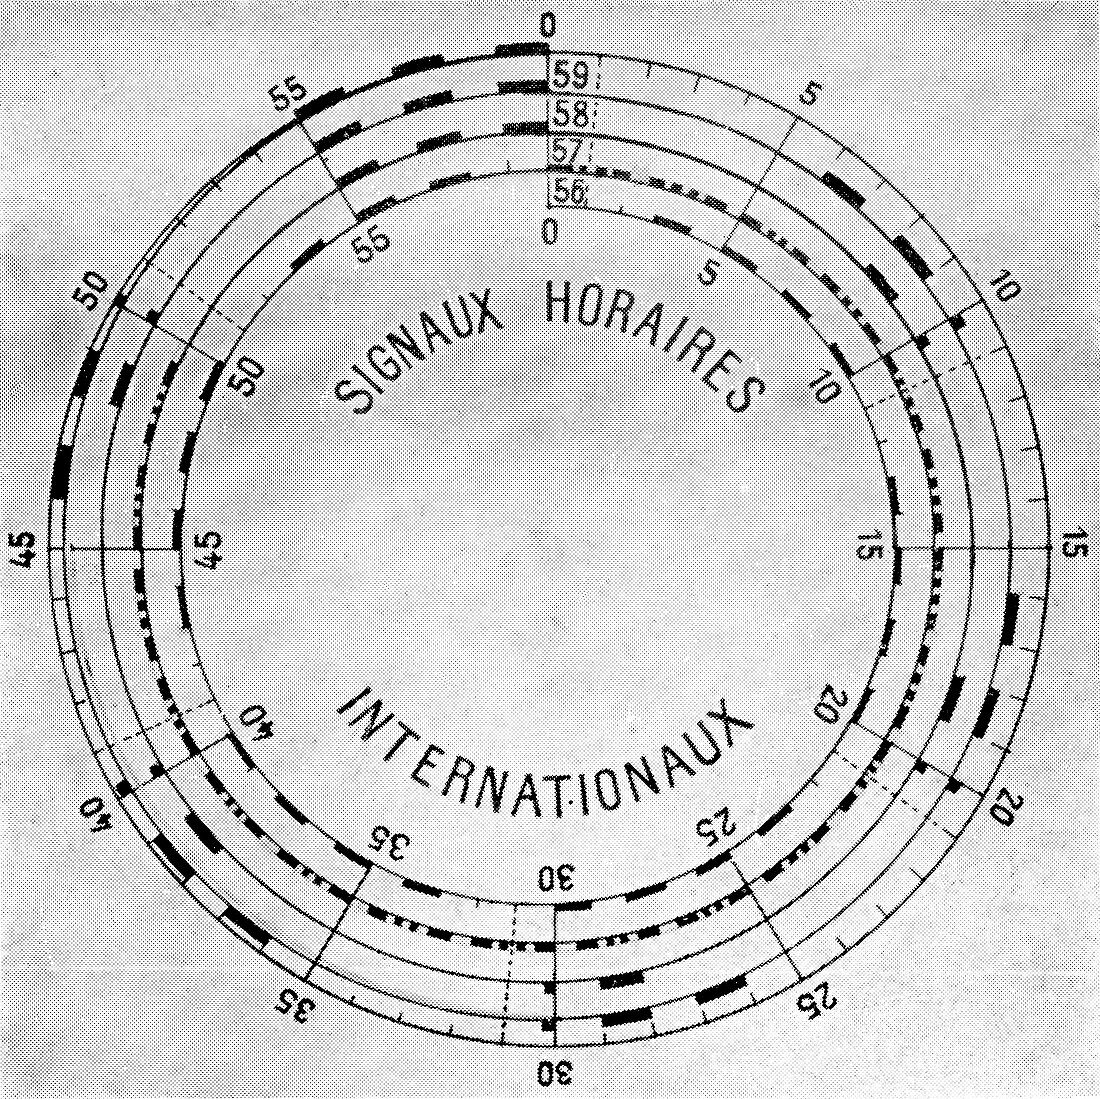 International timing signals,1914